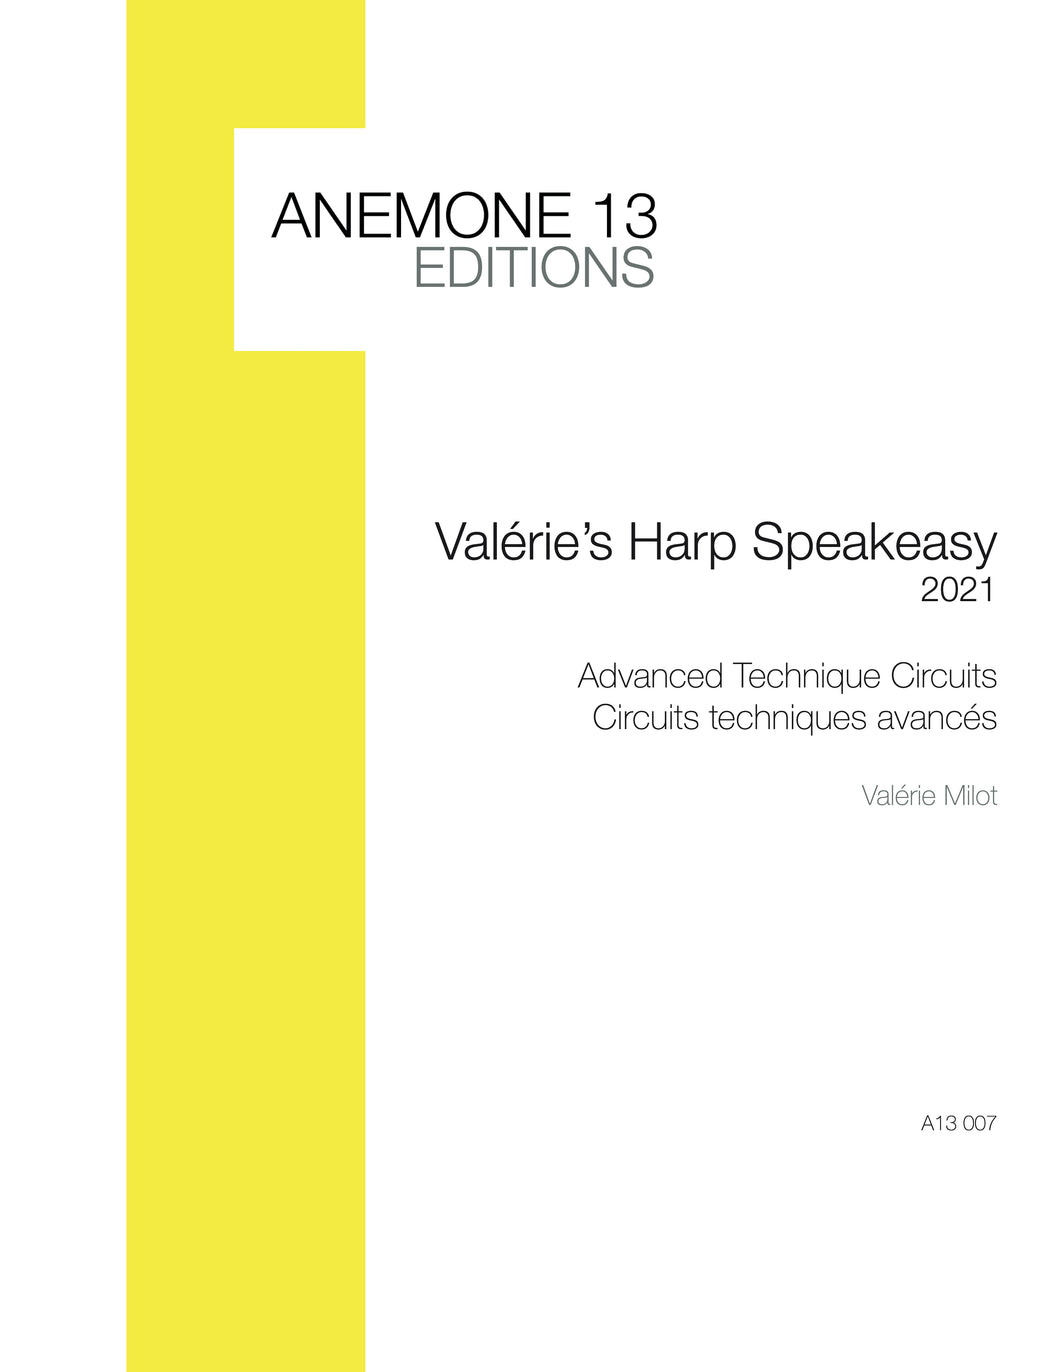 Circuits techniques avancés - Valérie's Harp Speakeasy 2021